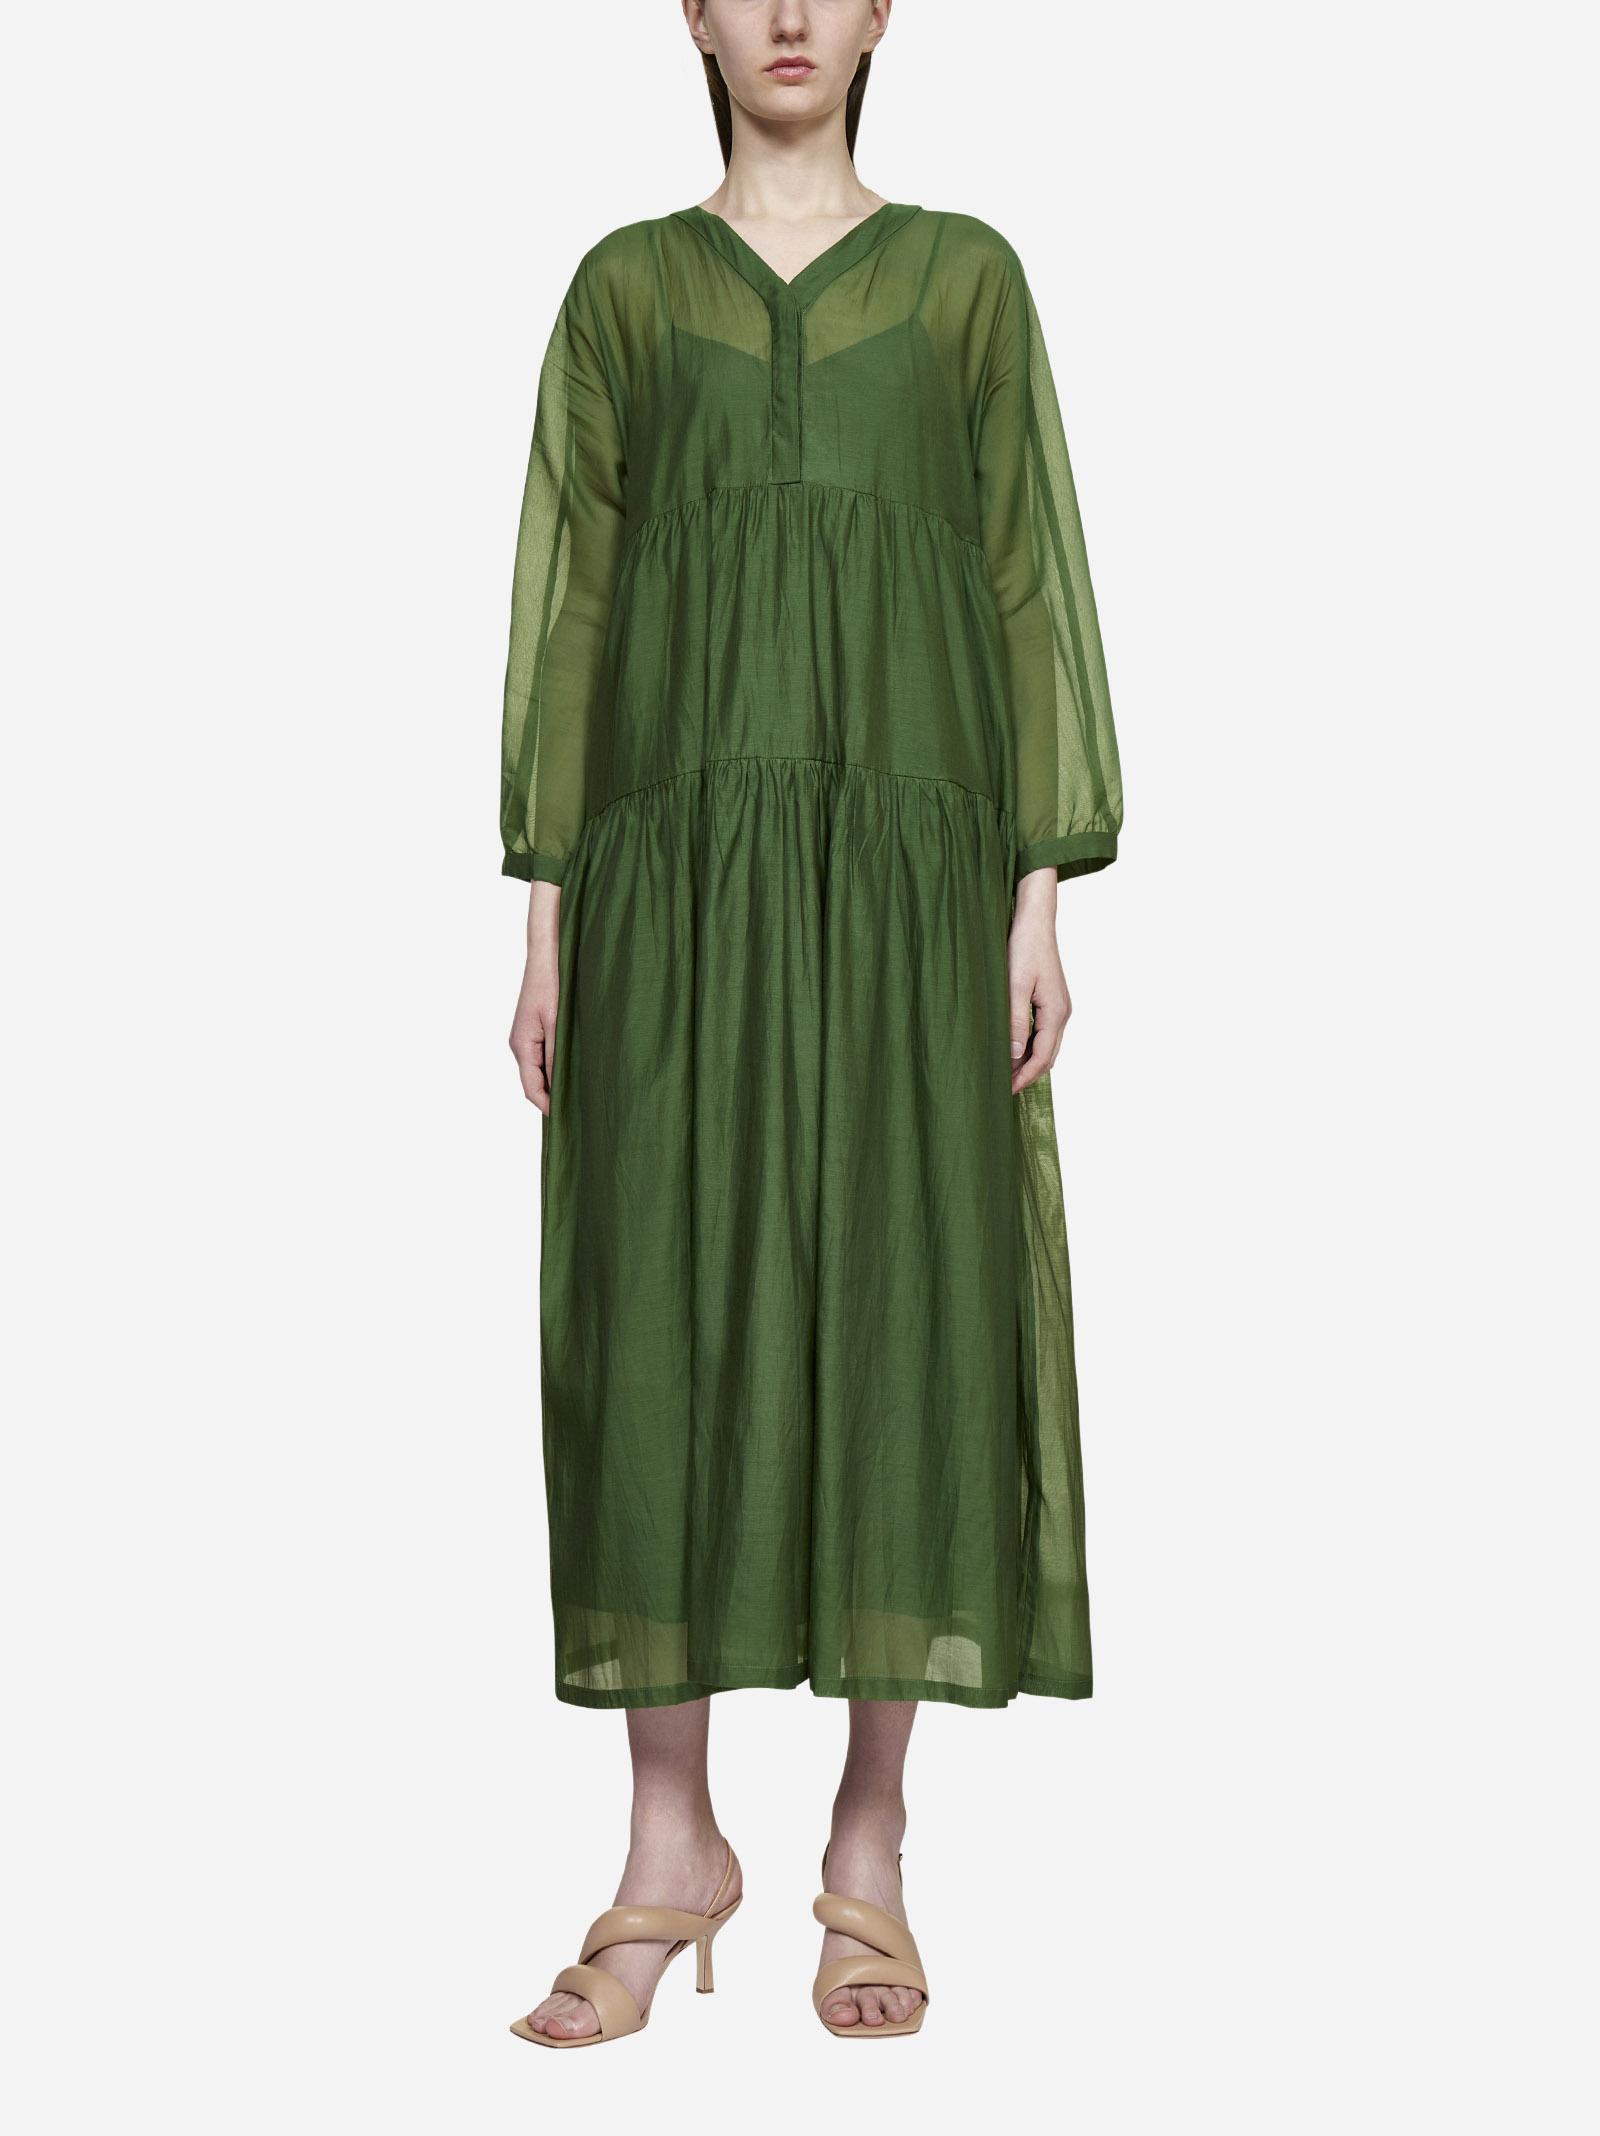 Max Mara Sesamo Cotton And Silk Dress in Green | Lyst